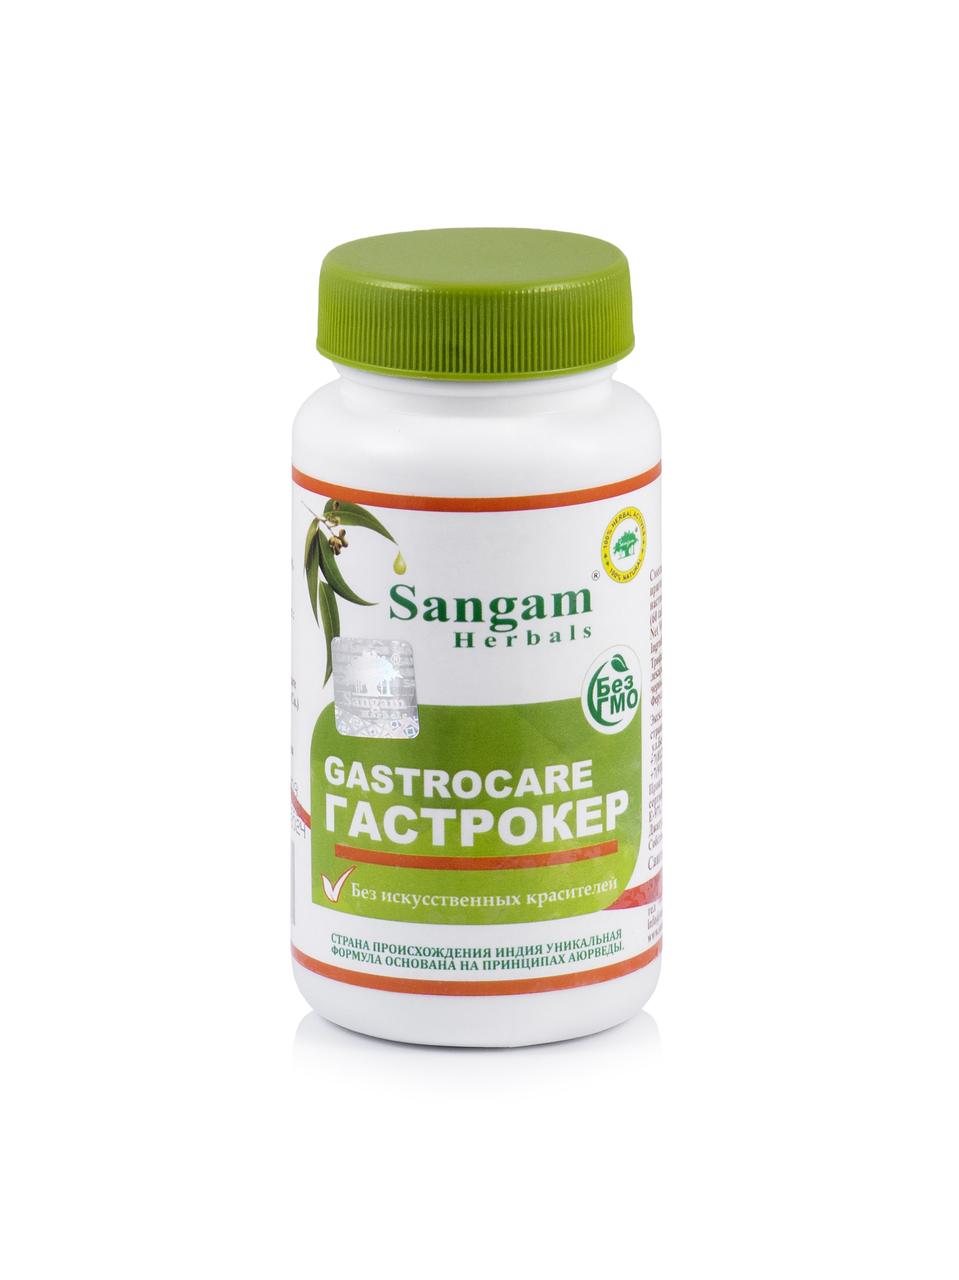 Таблетки Гастрокер, 750 мг, 60 таблеток,Sangam Herbals